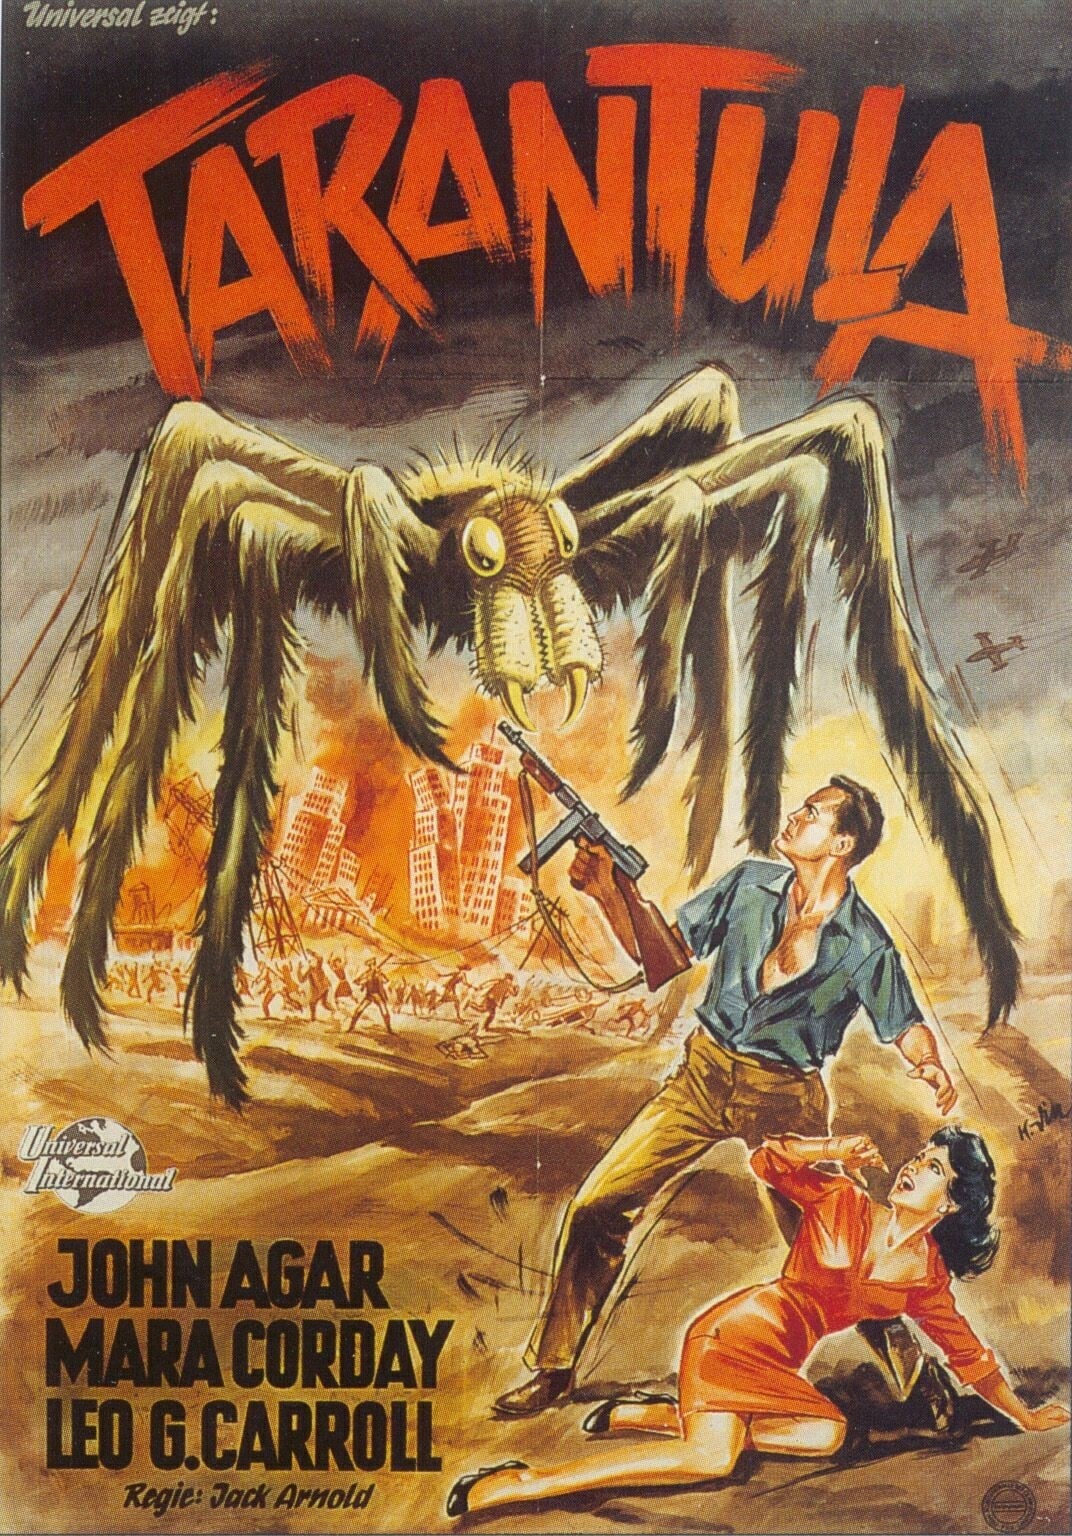 Plakat von "Tarantula"